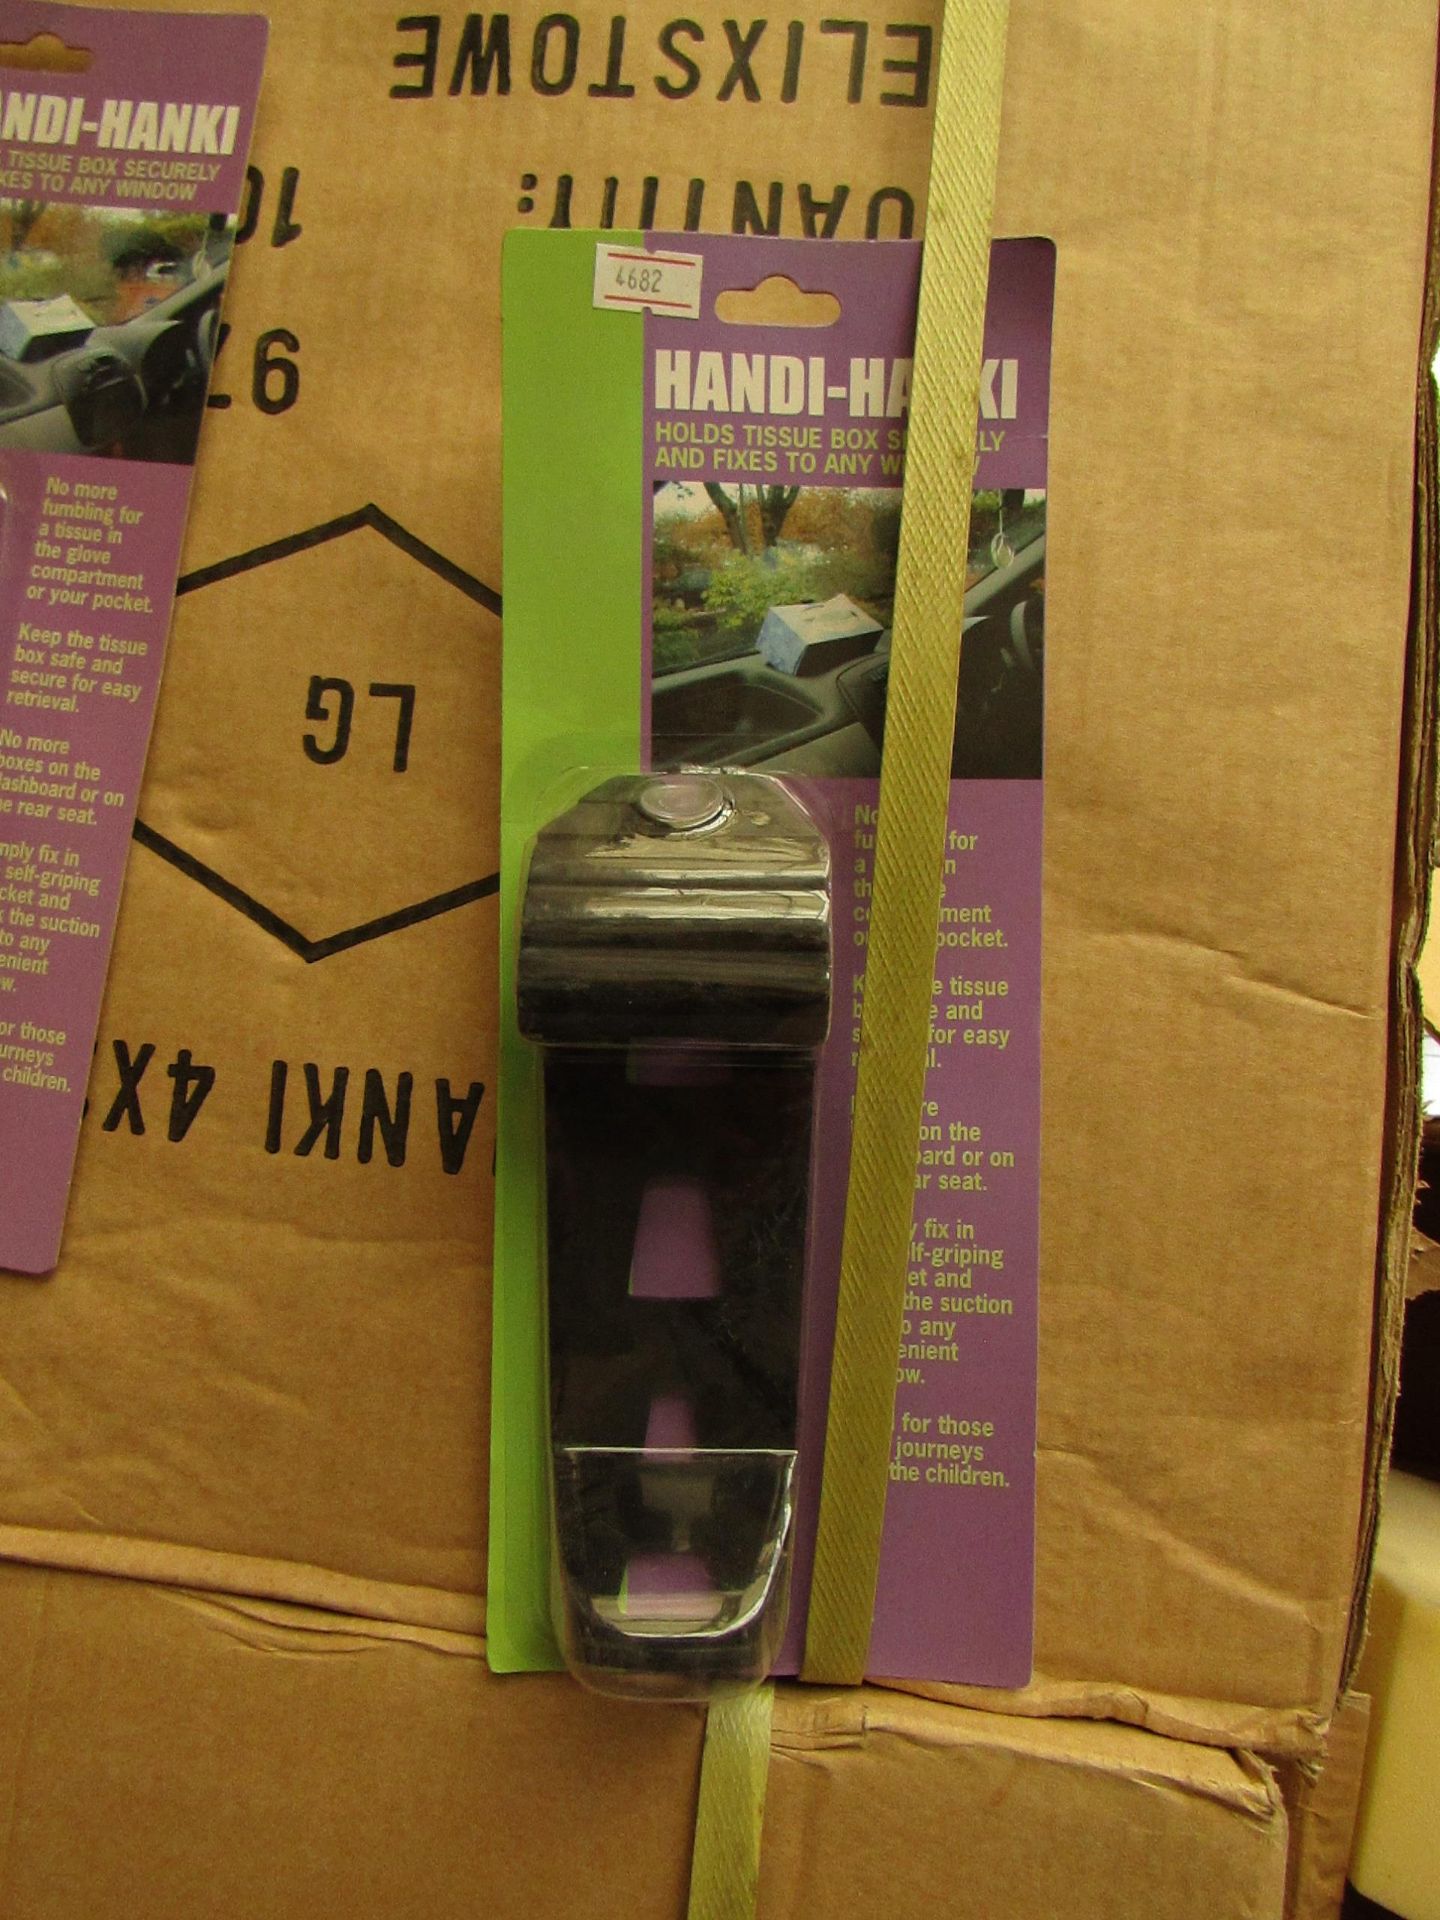 Box of 100x Handi-Hanki tissue box suction mounted holder's - New & Boxed.